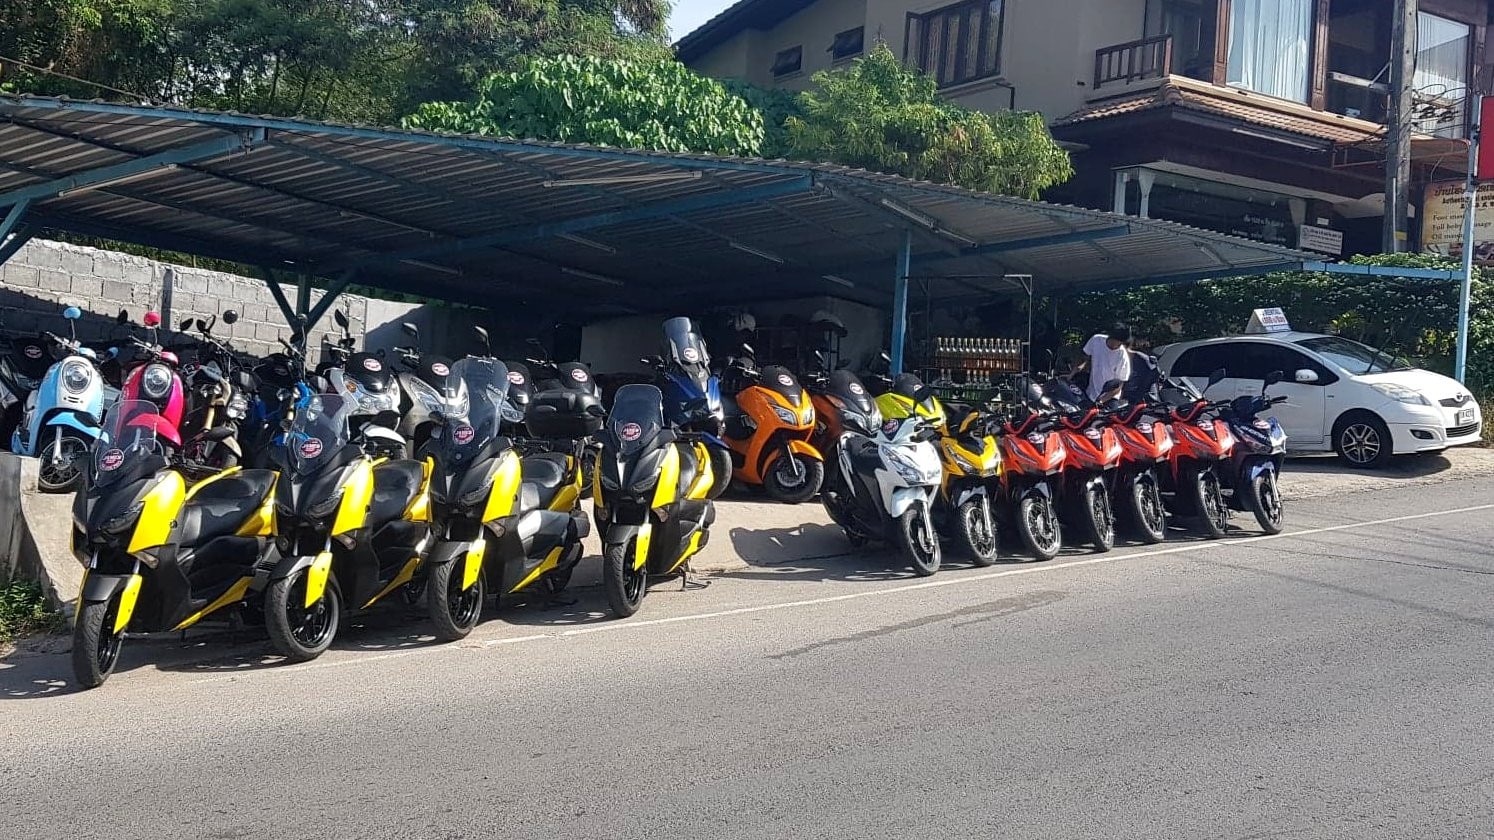 A variety of rental bikes at James Rental, Koh Samui